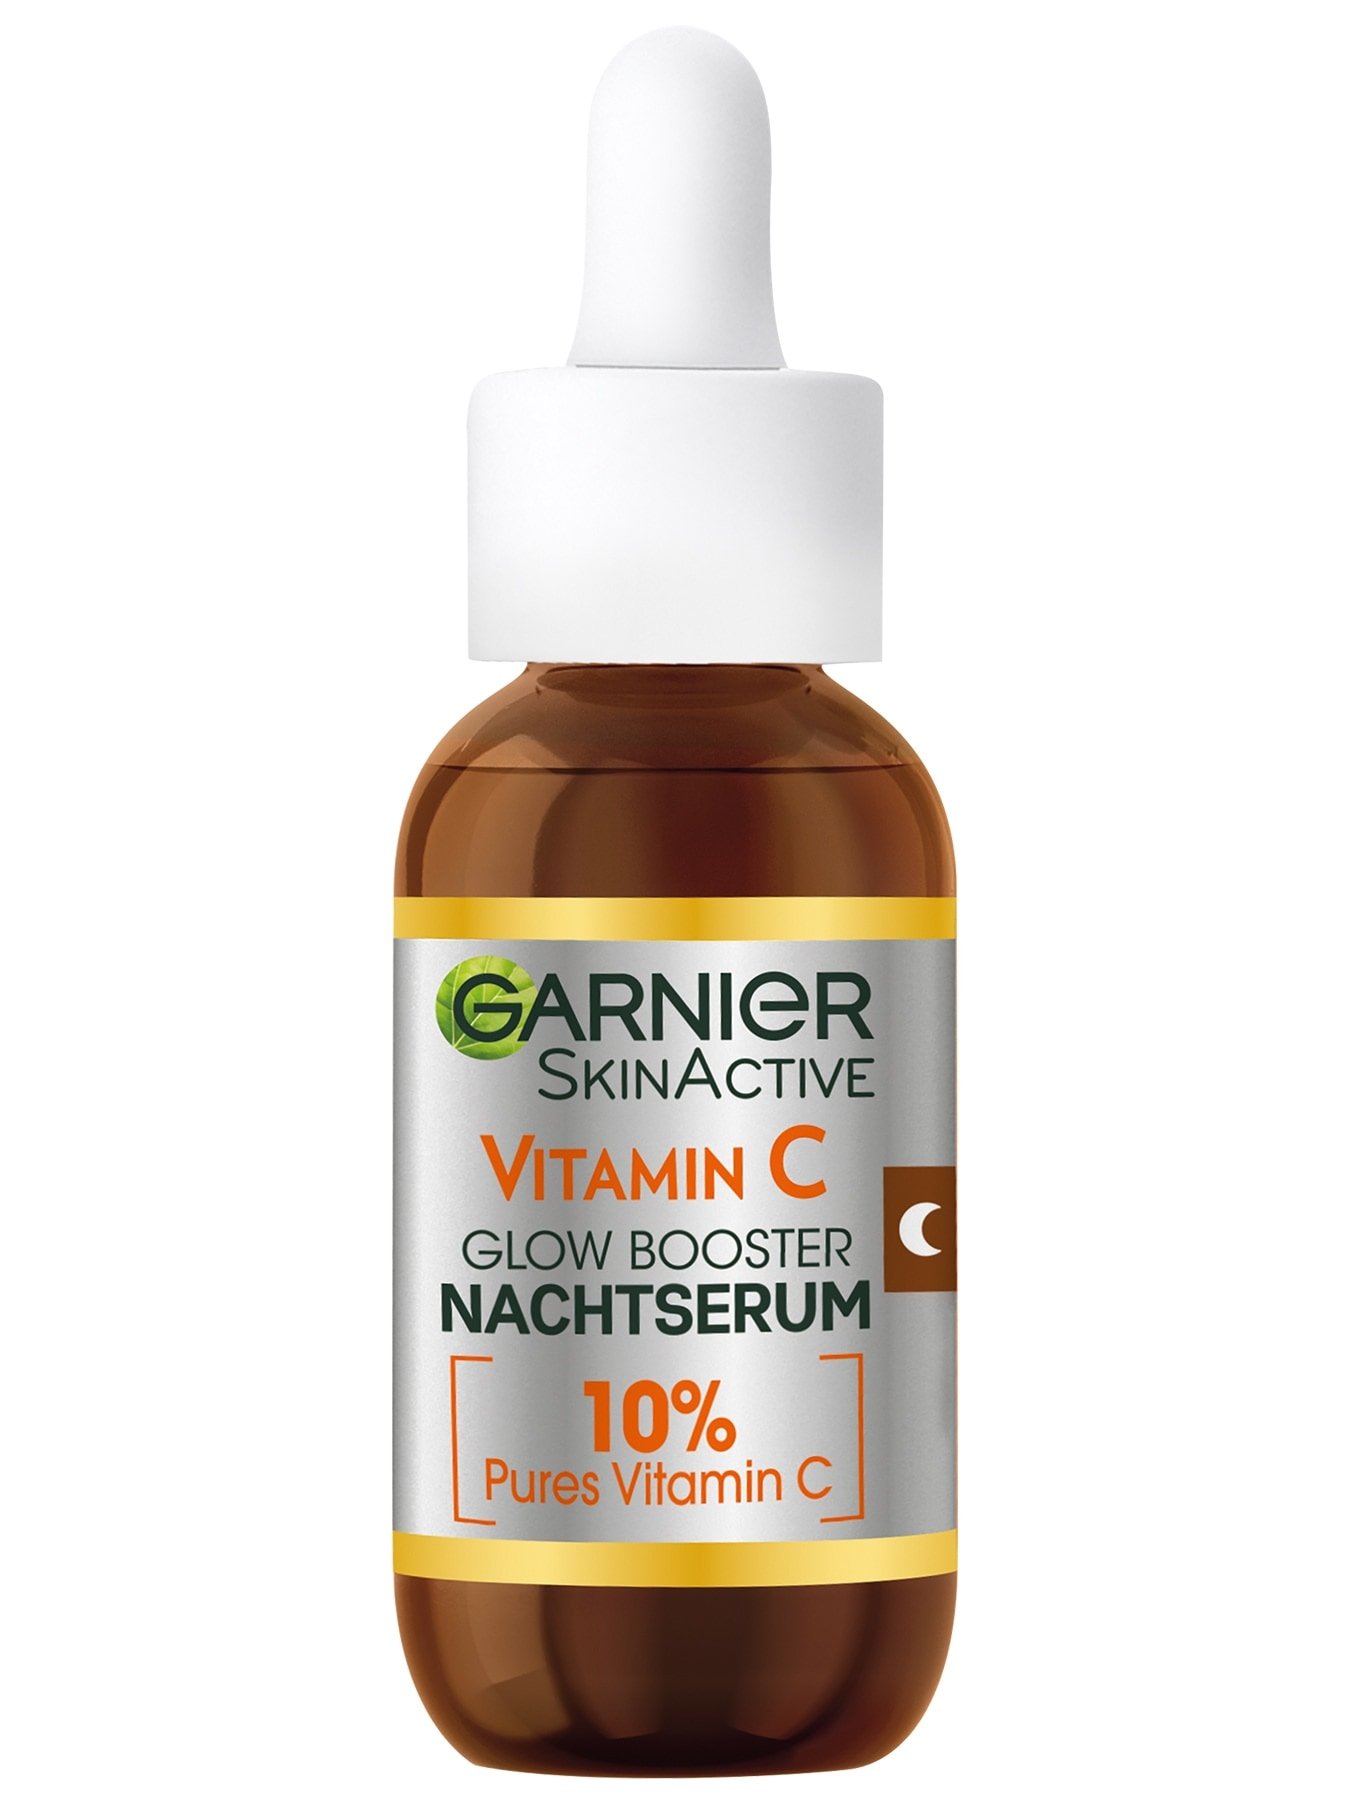 SkinActive Vitamin C Glow Booster Nachtserum | Garnier